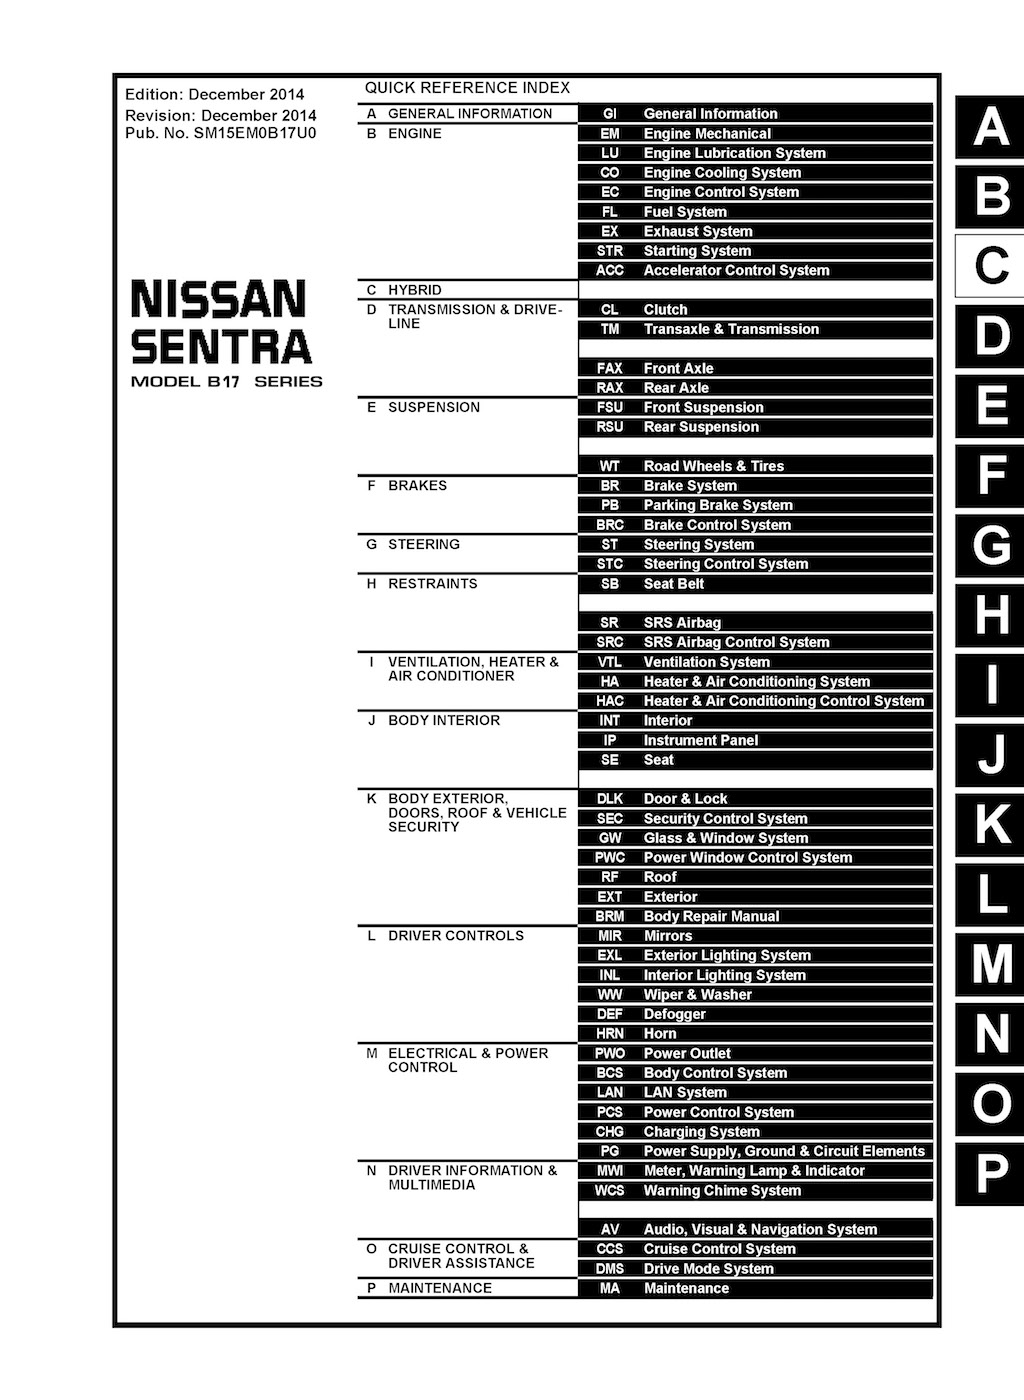 Table of Contents 2015 Nissan Sentra Repair Manual